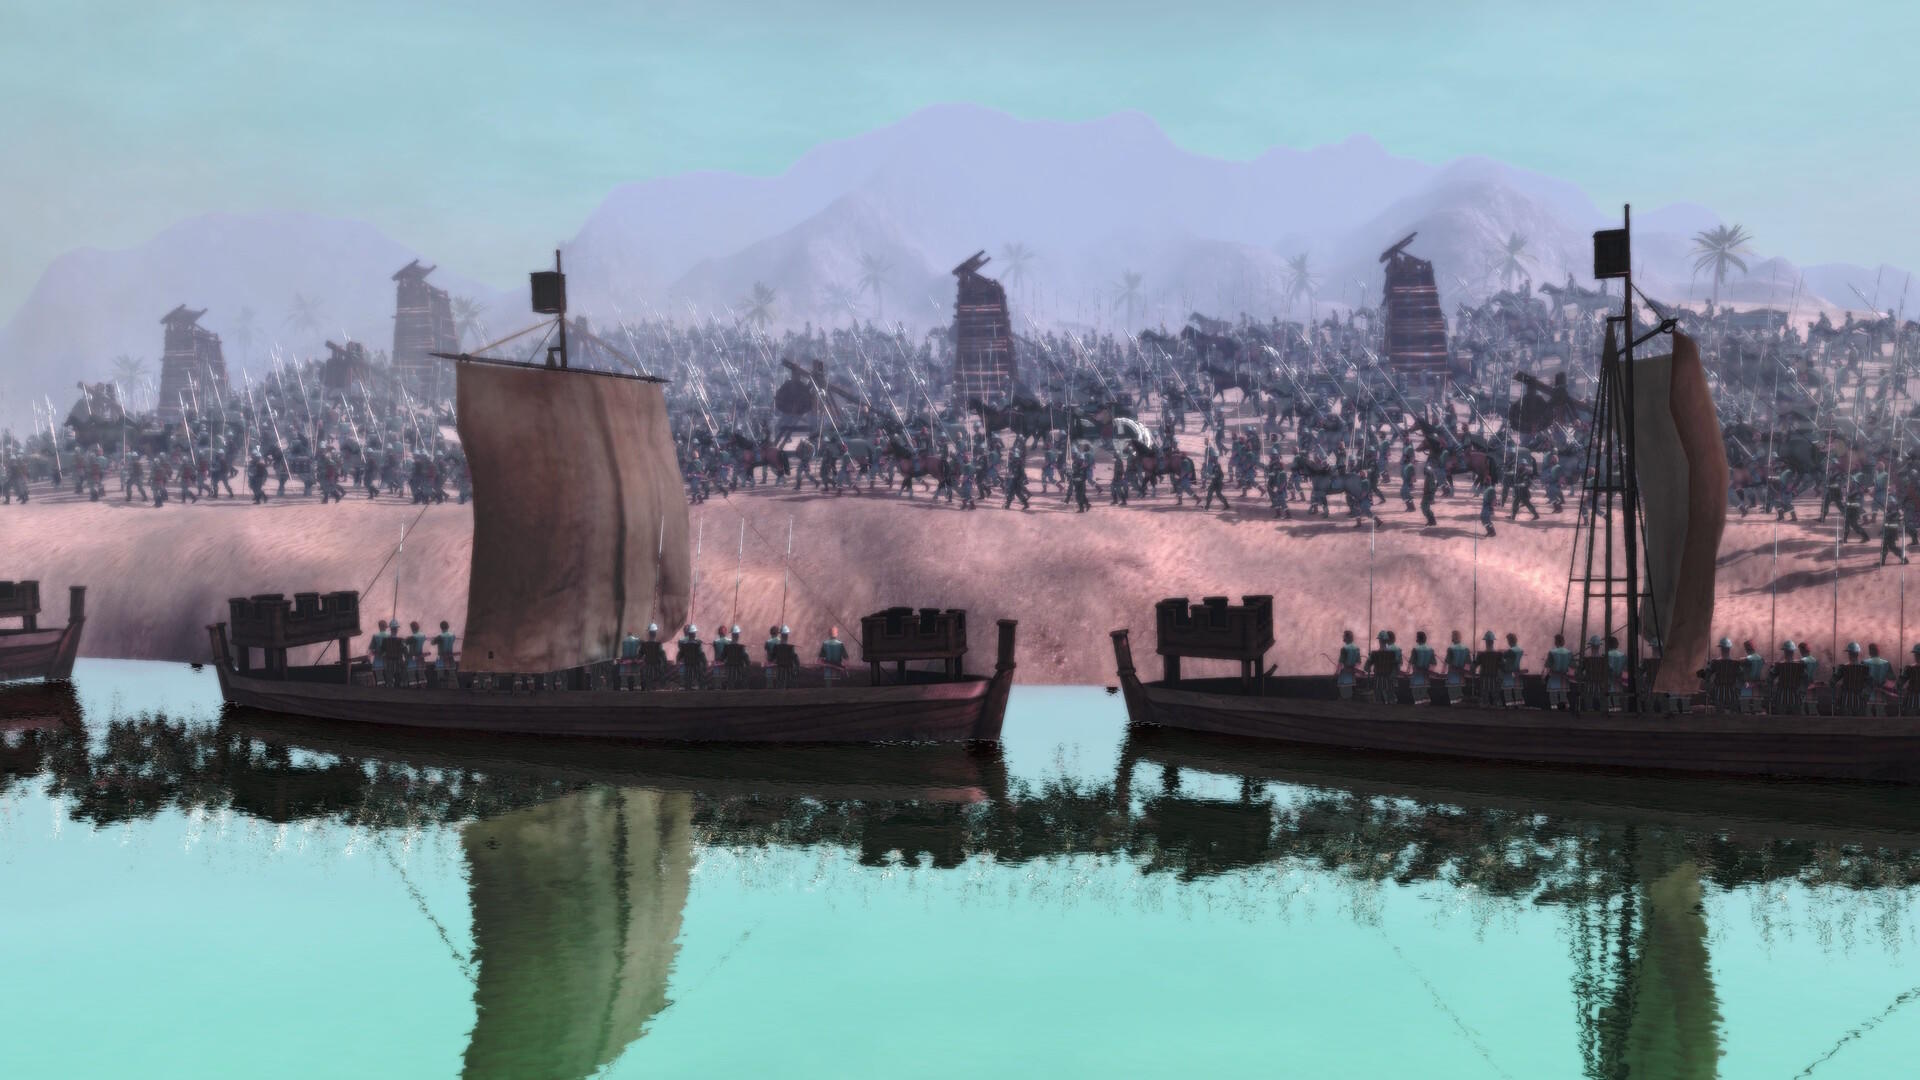 Screenshot of Renaissance Kingdom Wars